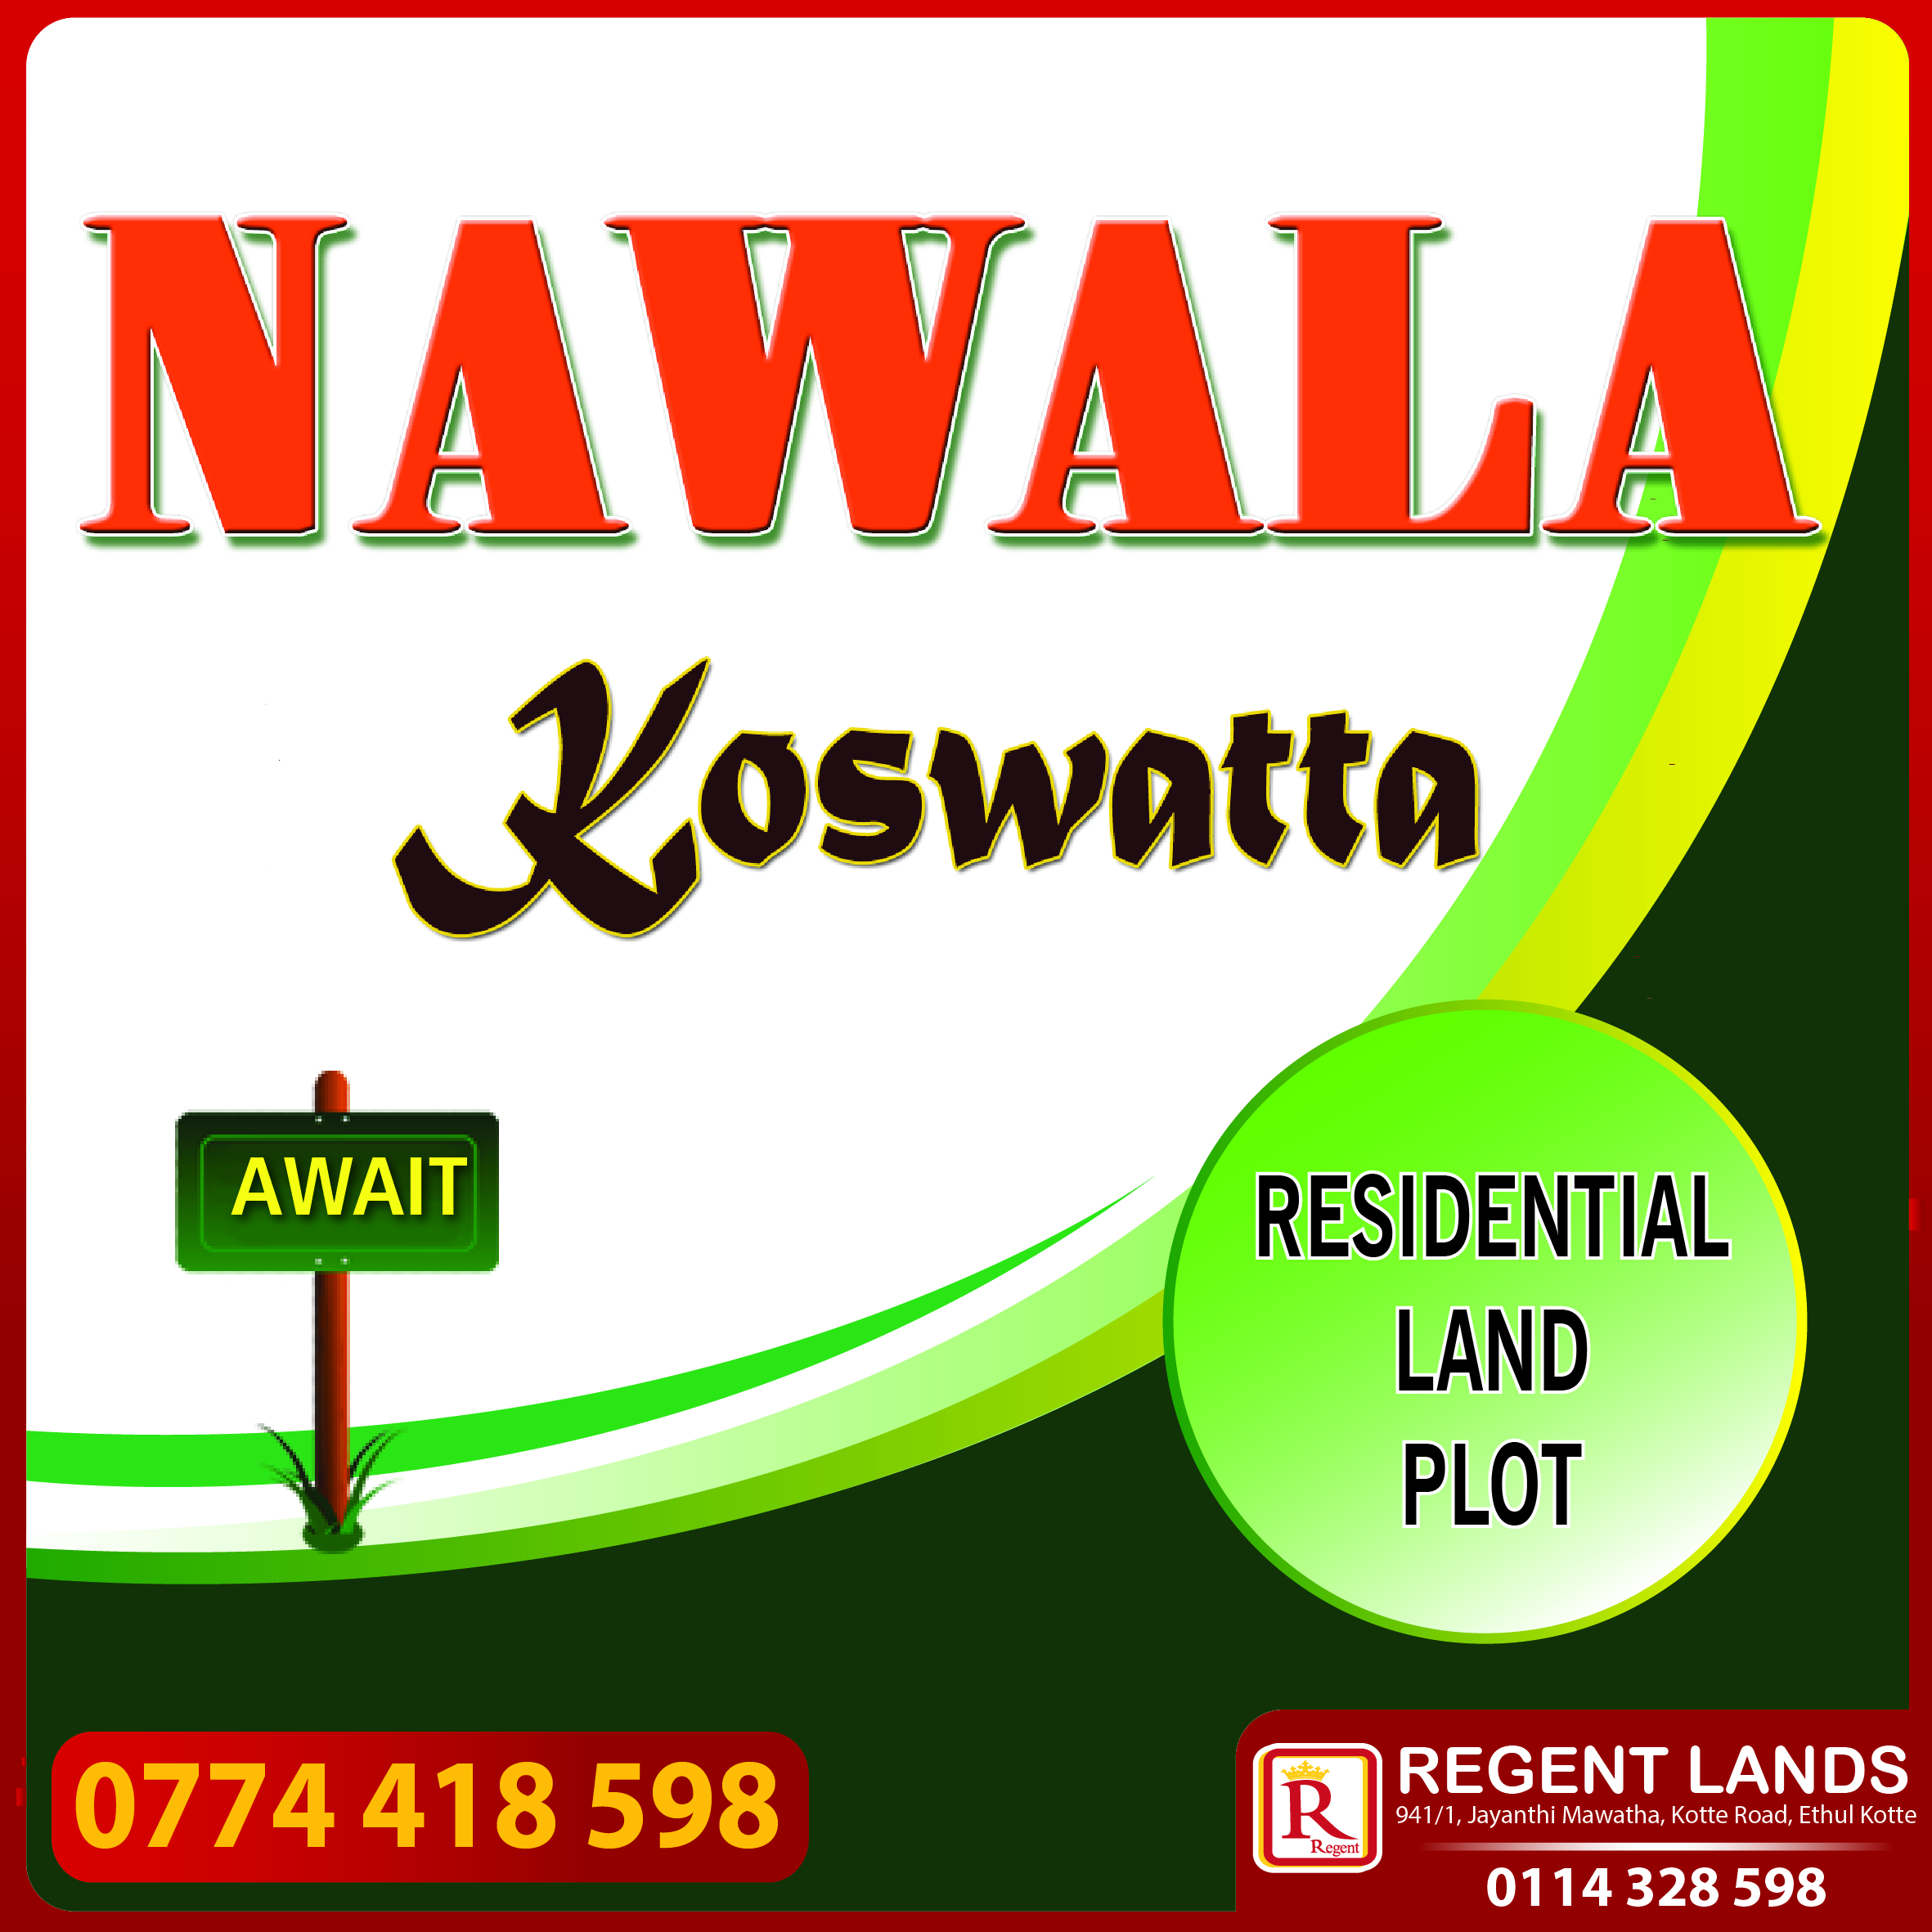 Nawala – Koswatta